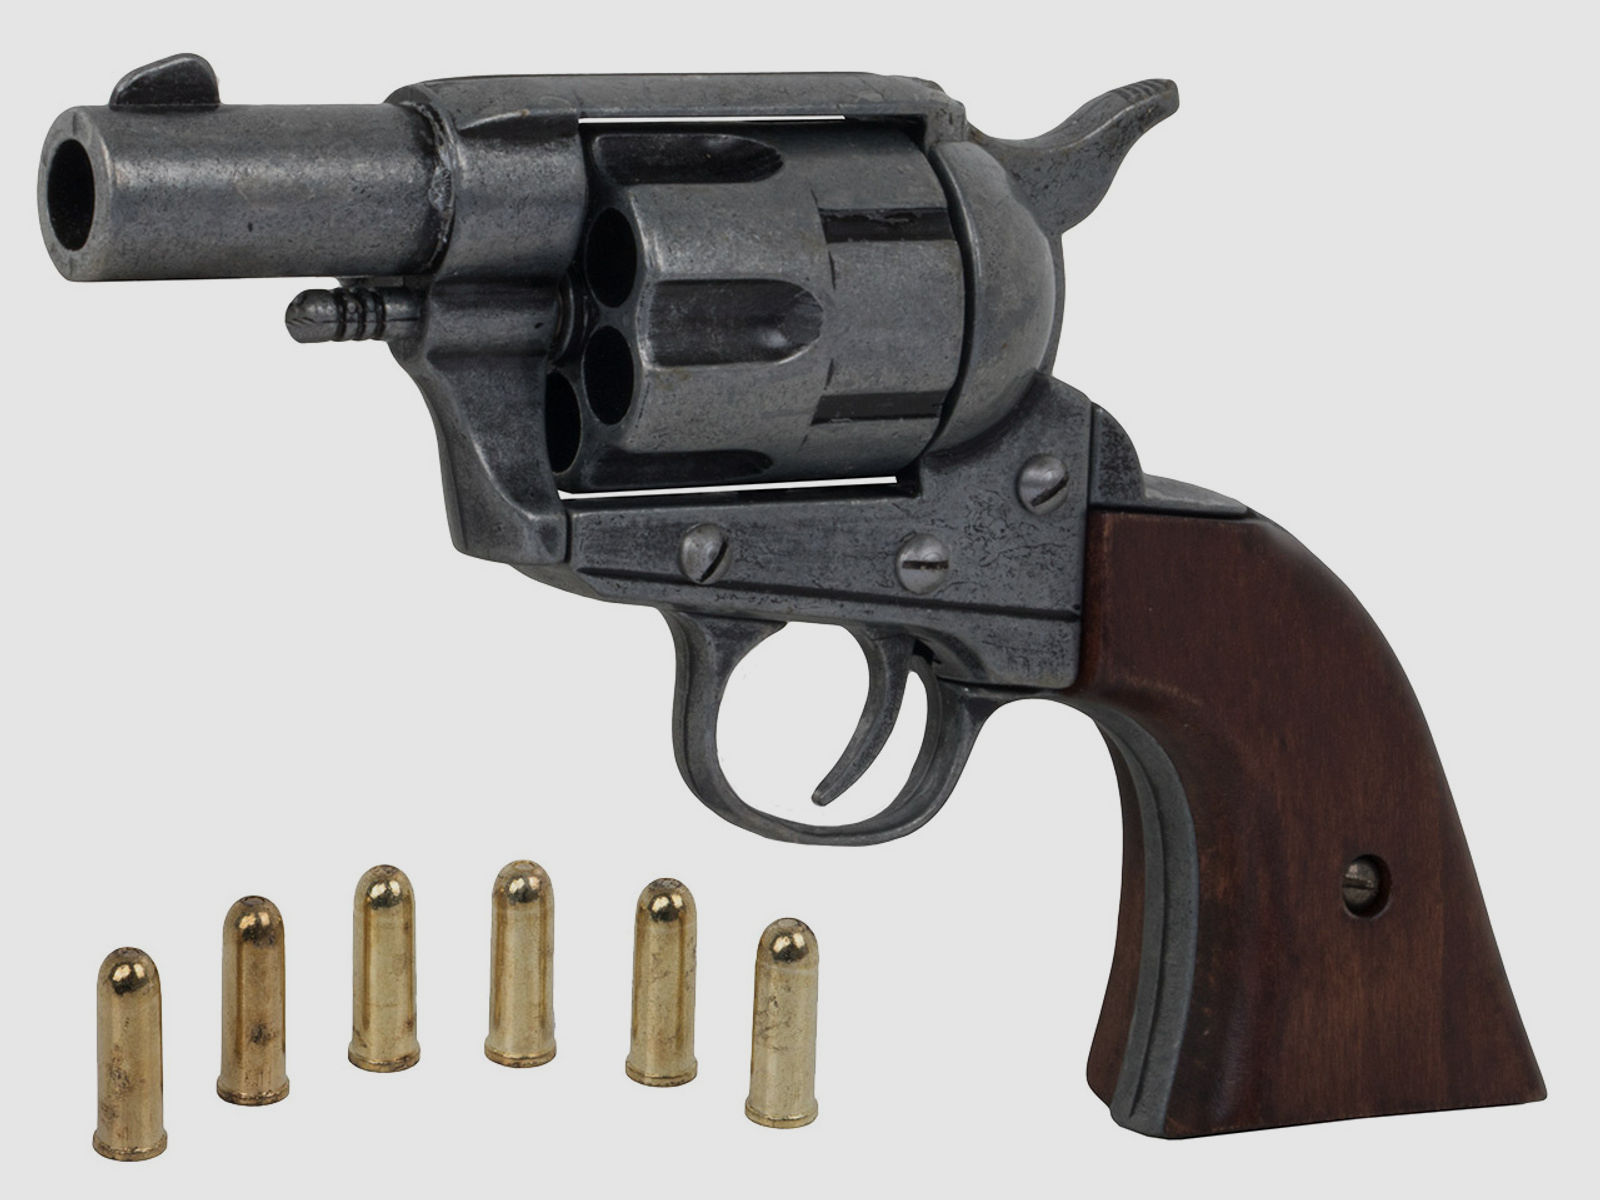 Deko Revolver Kolser Colt SAA Single Action Army Snub Nose 2,5 Zoll Holzgriffschalen grau